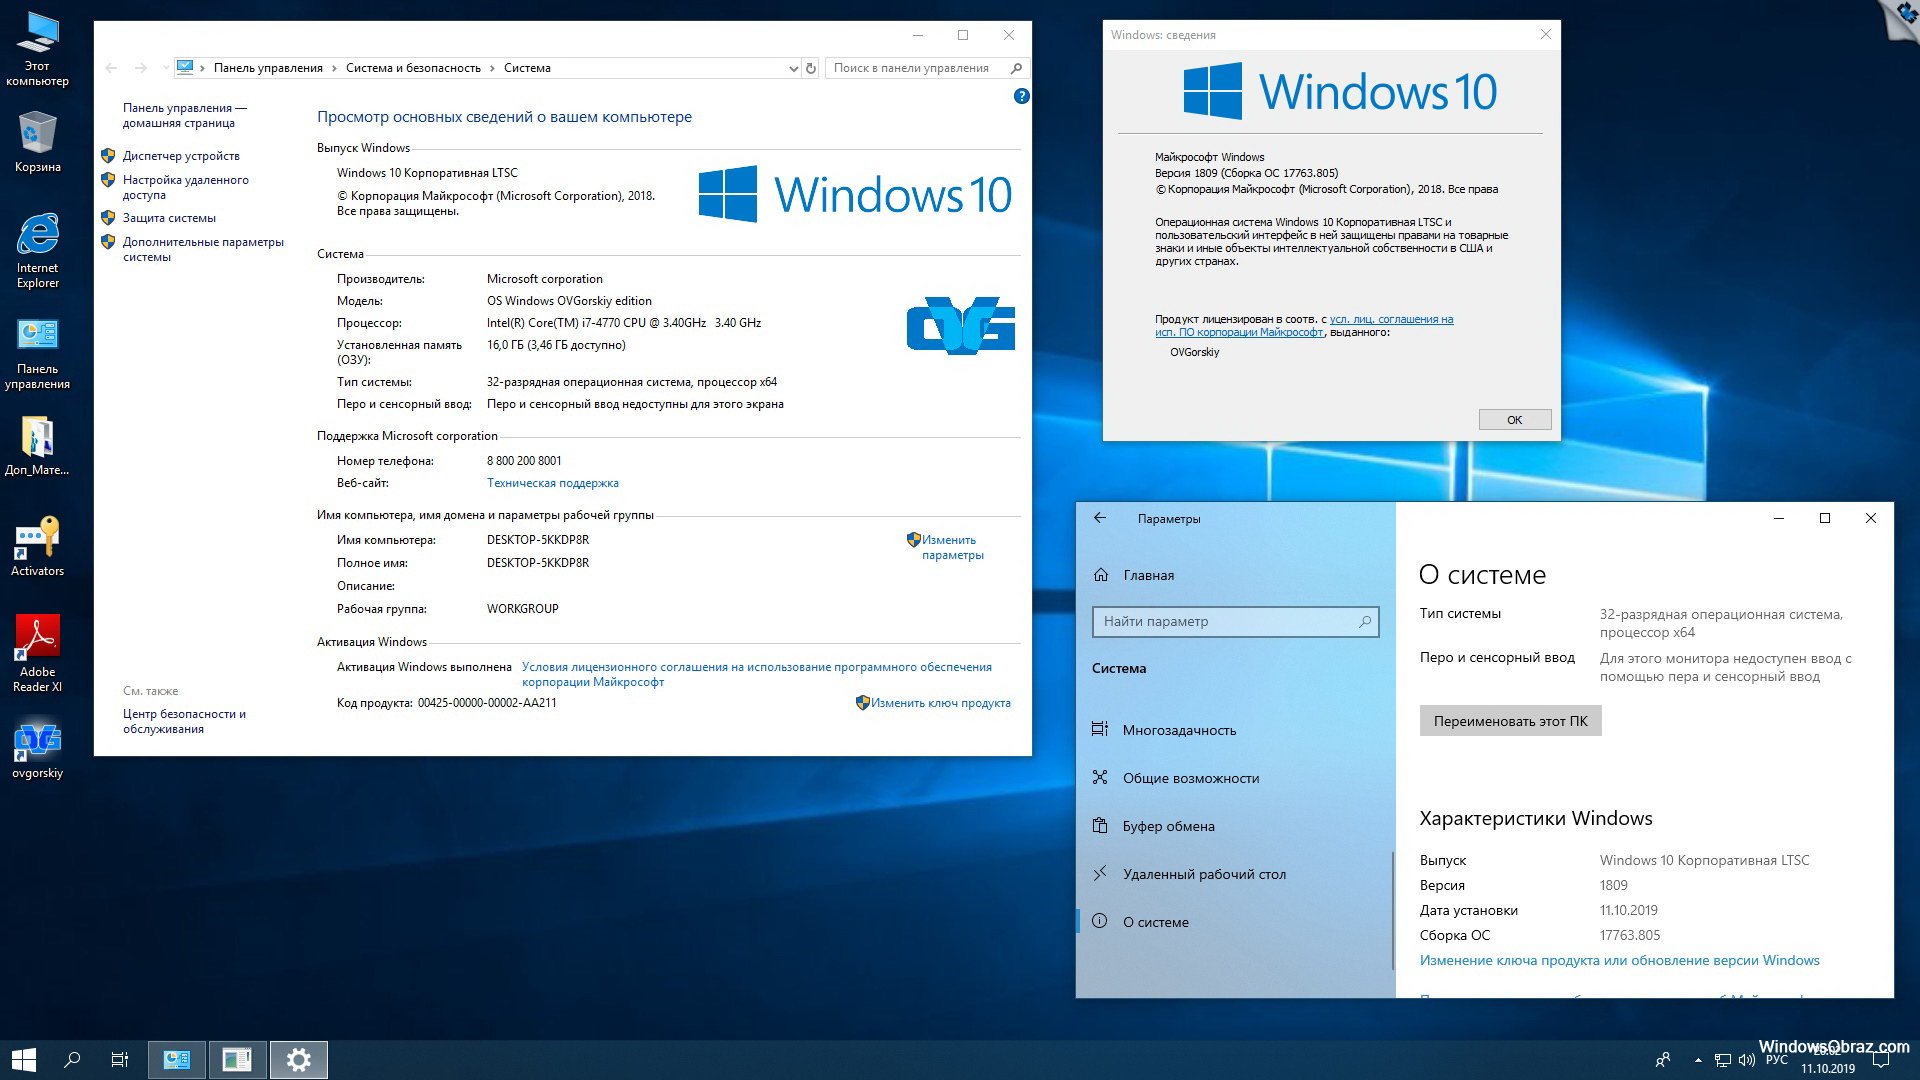 Вин 10 64 бит. Windows 10 Enterprise корпоративная) 64 bit. ОС: 64-битная Windows 10. Операционная система Windows 10 Pro. Microsoft Windows 10 Enterprise LTSC 2019 1809.